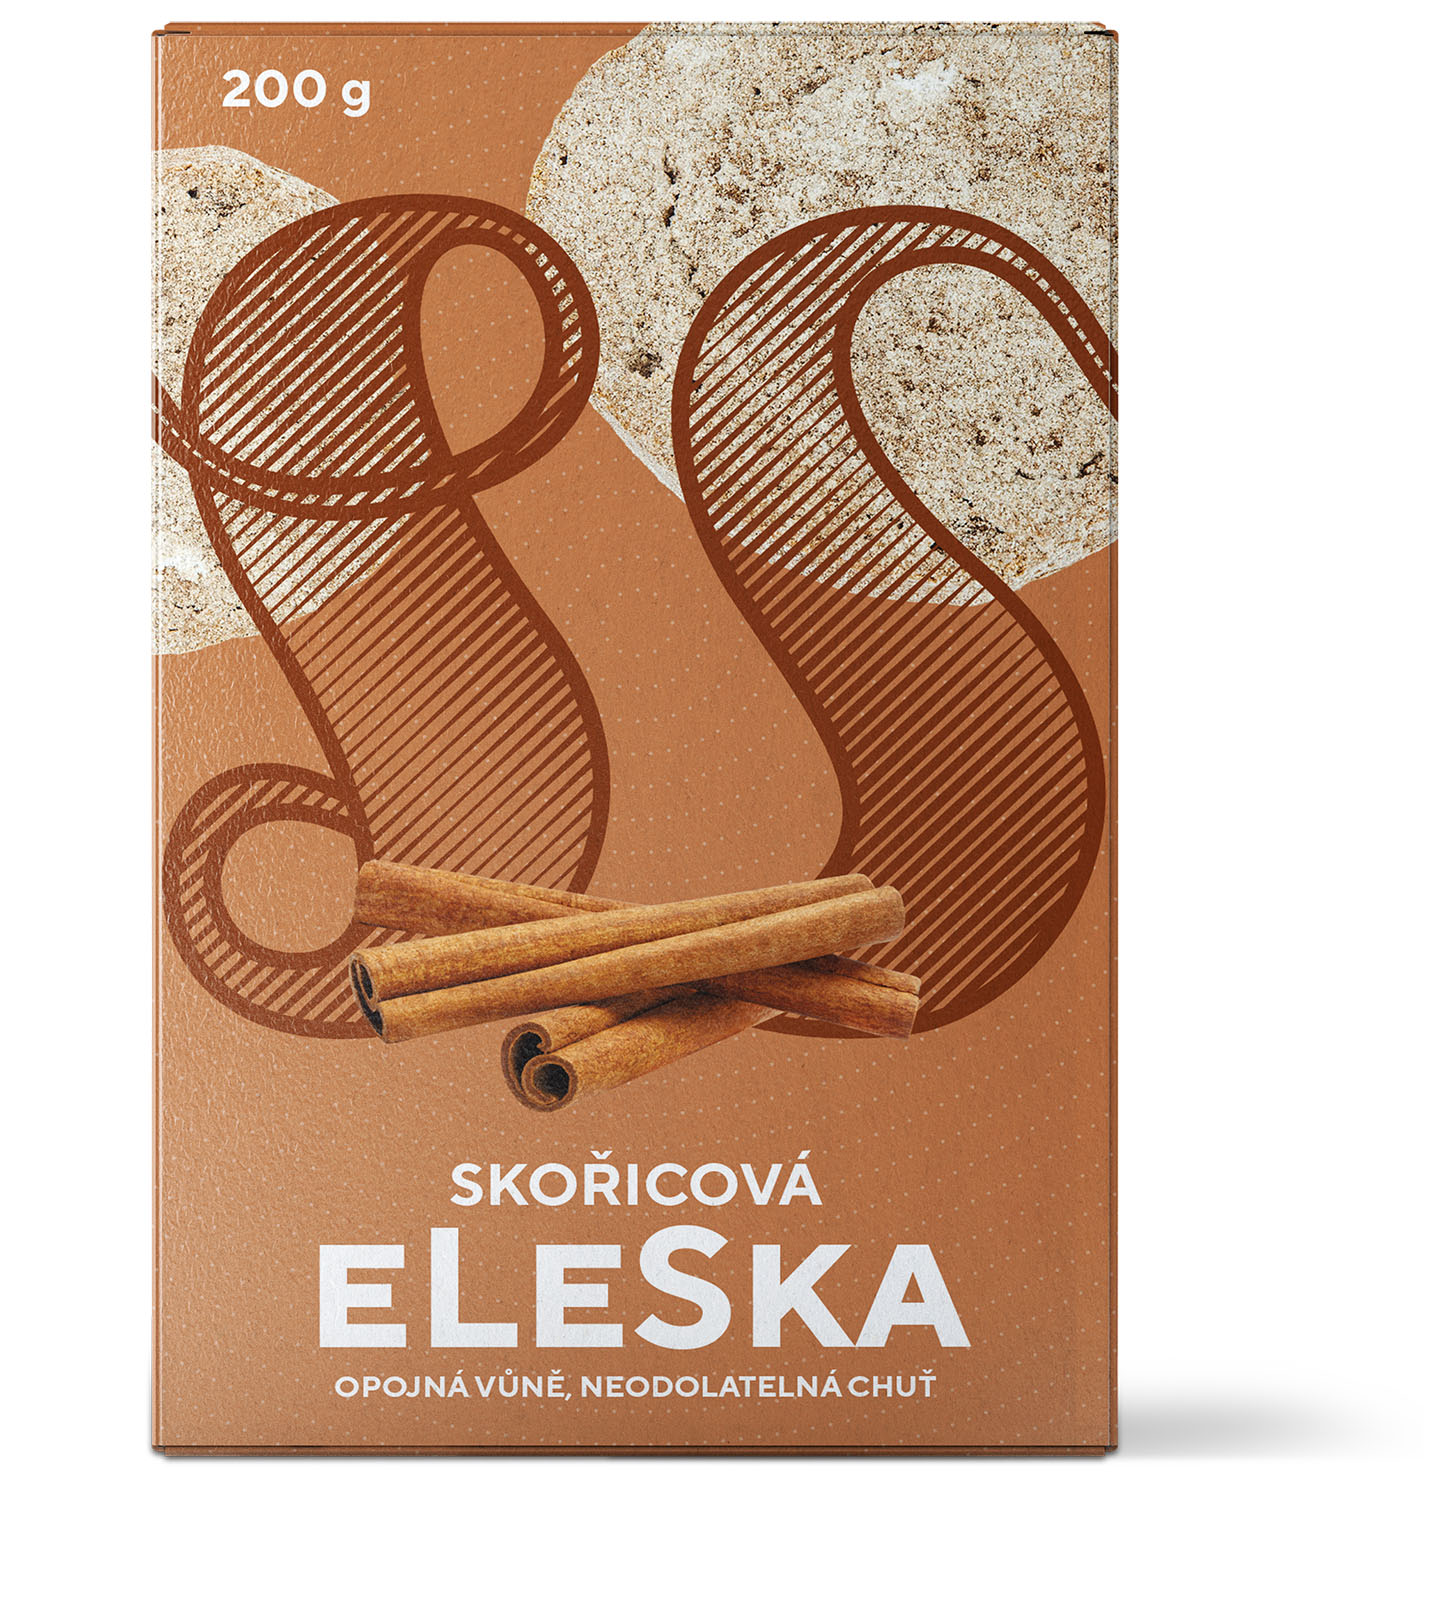 Cinnamon eLeSka 